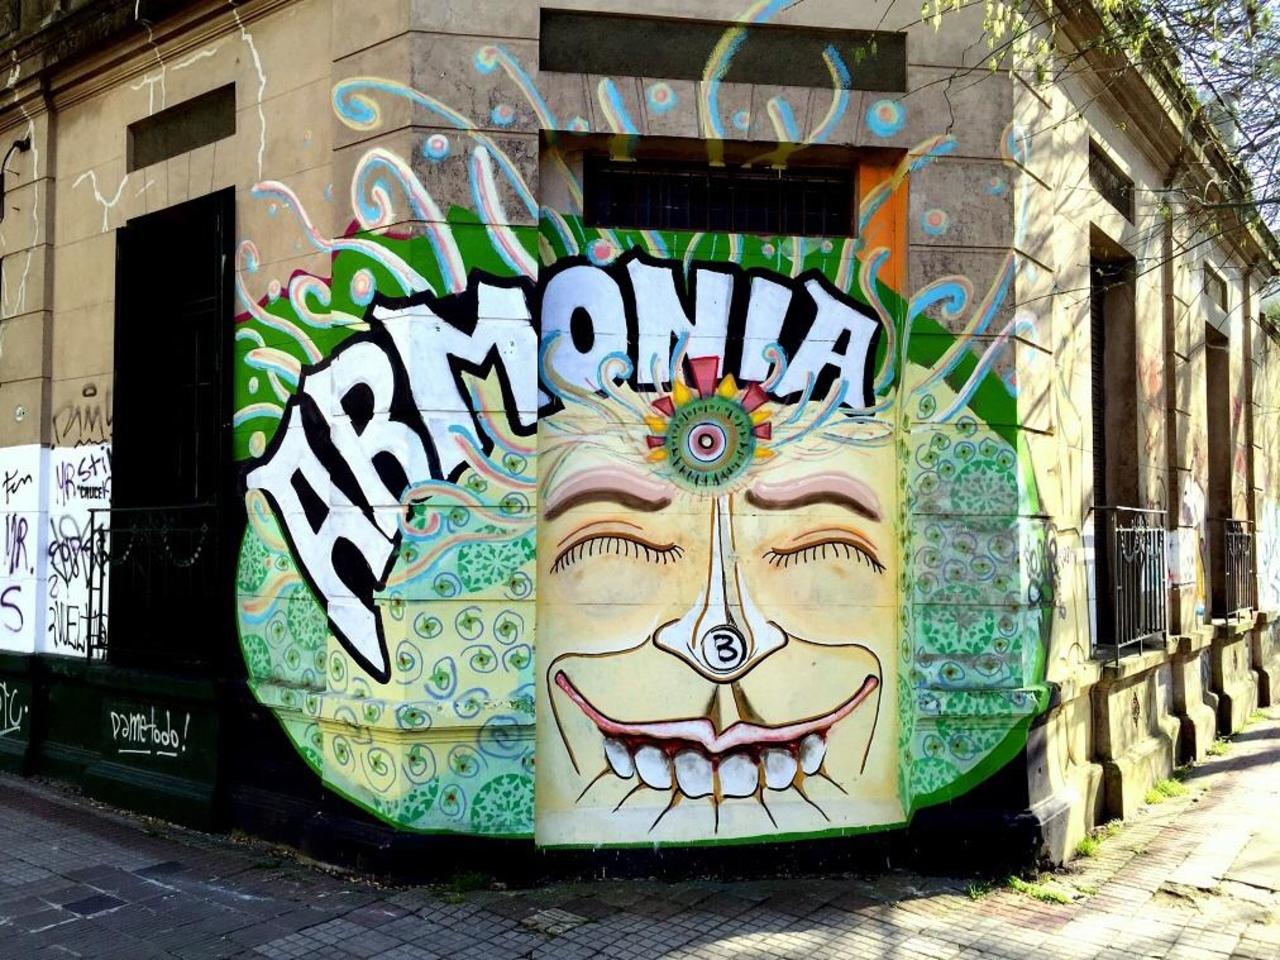 #Graffiti de hoy: << Harmony >> calles 67y6 #LaPlata #Argentina #StreetArt #UrbanArt #ArteUrbano http://t.co/YsALTdMT9m